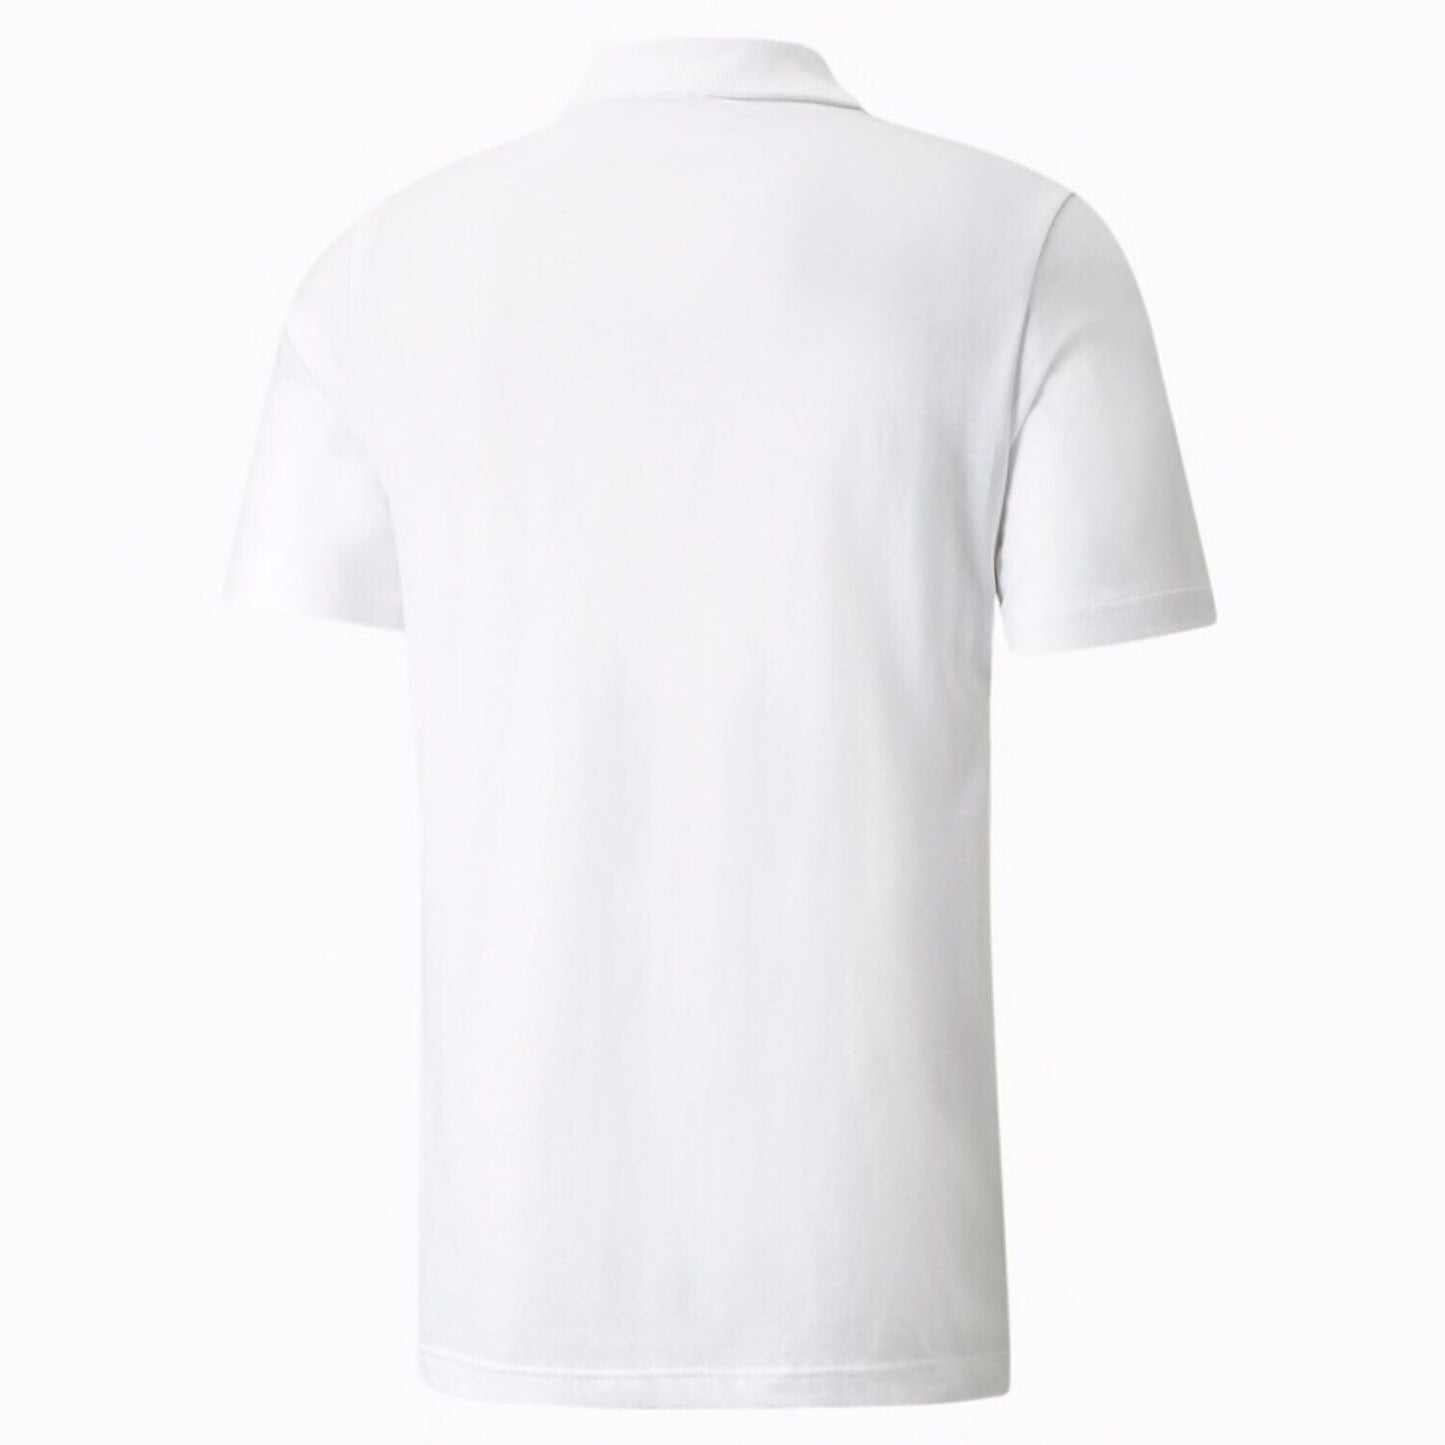 BMW Msport Essentials White Polo Shirt - 532252 02